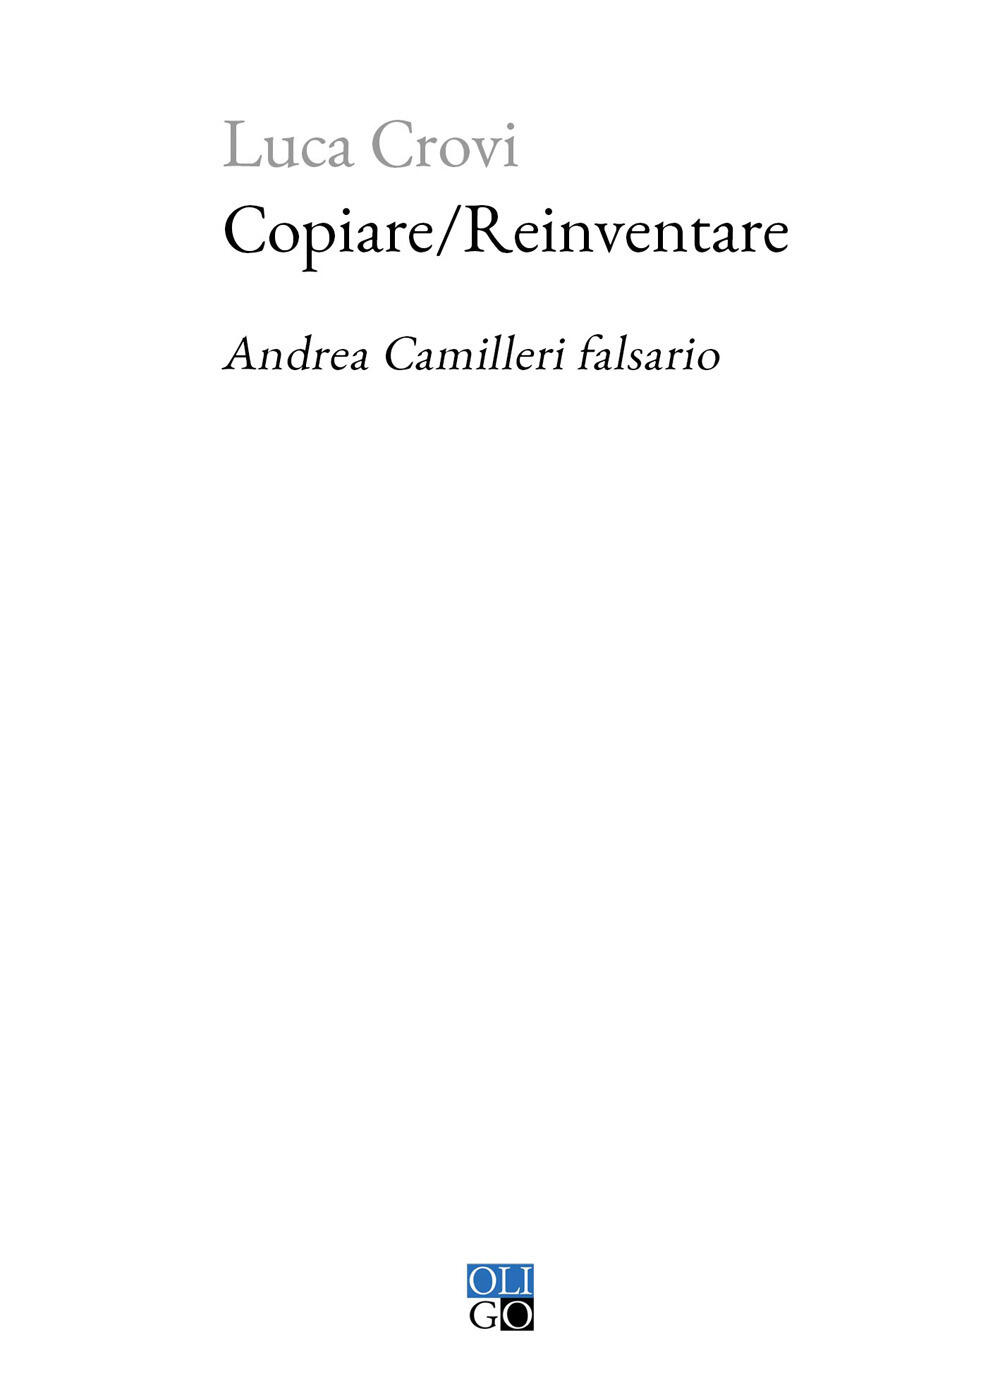 Copiare/Reinventare. Andrea Camilleri Falsario di Luca Crovi – Recensione